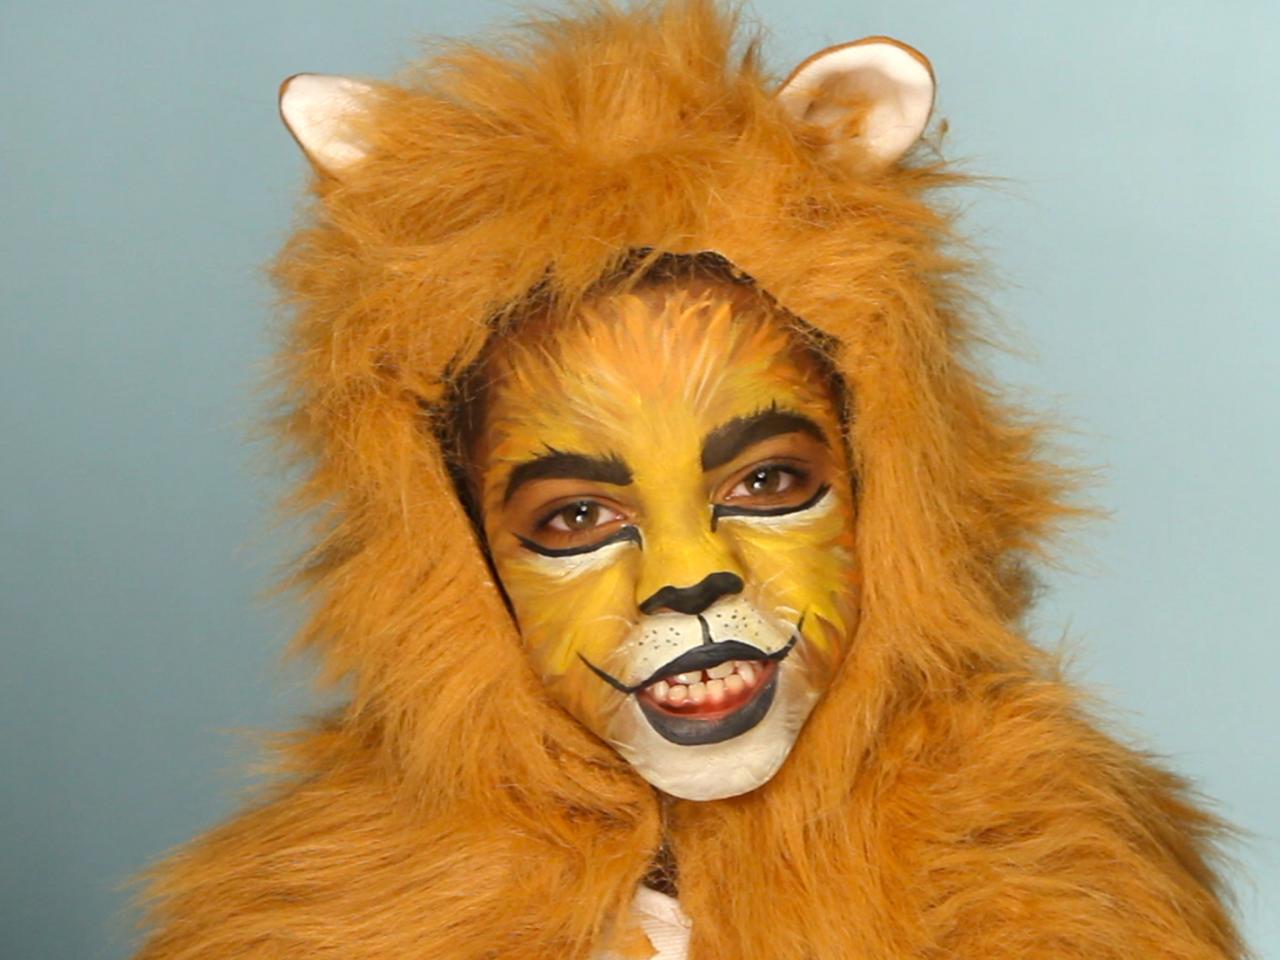 Kid's Lion Costume for Halloween.